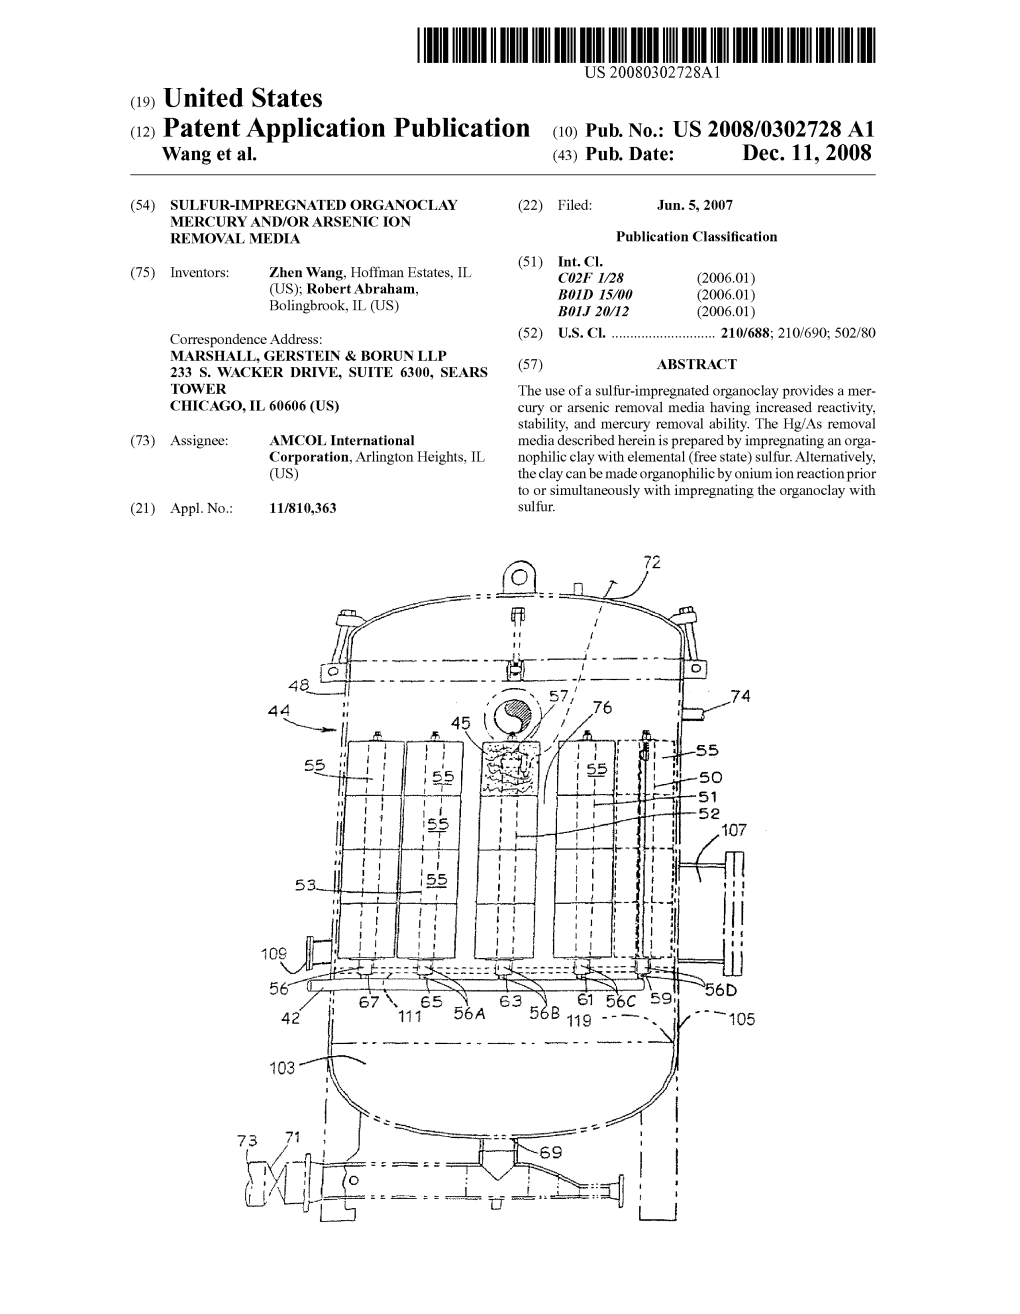 (12) Patent Application Publication (10) Pub. No.: US 2008/0302728A1 Wang Et Al